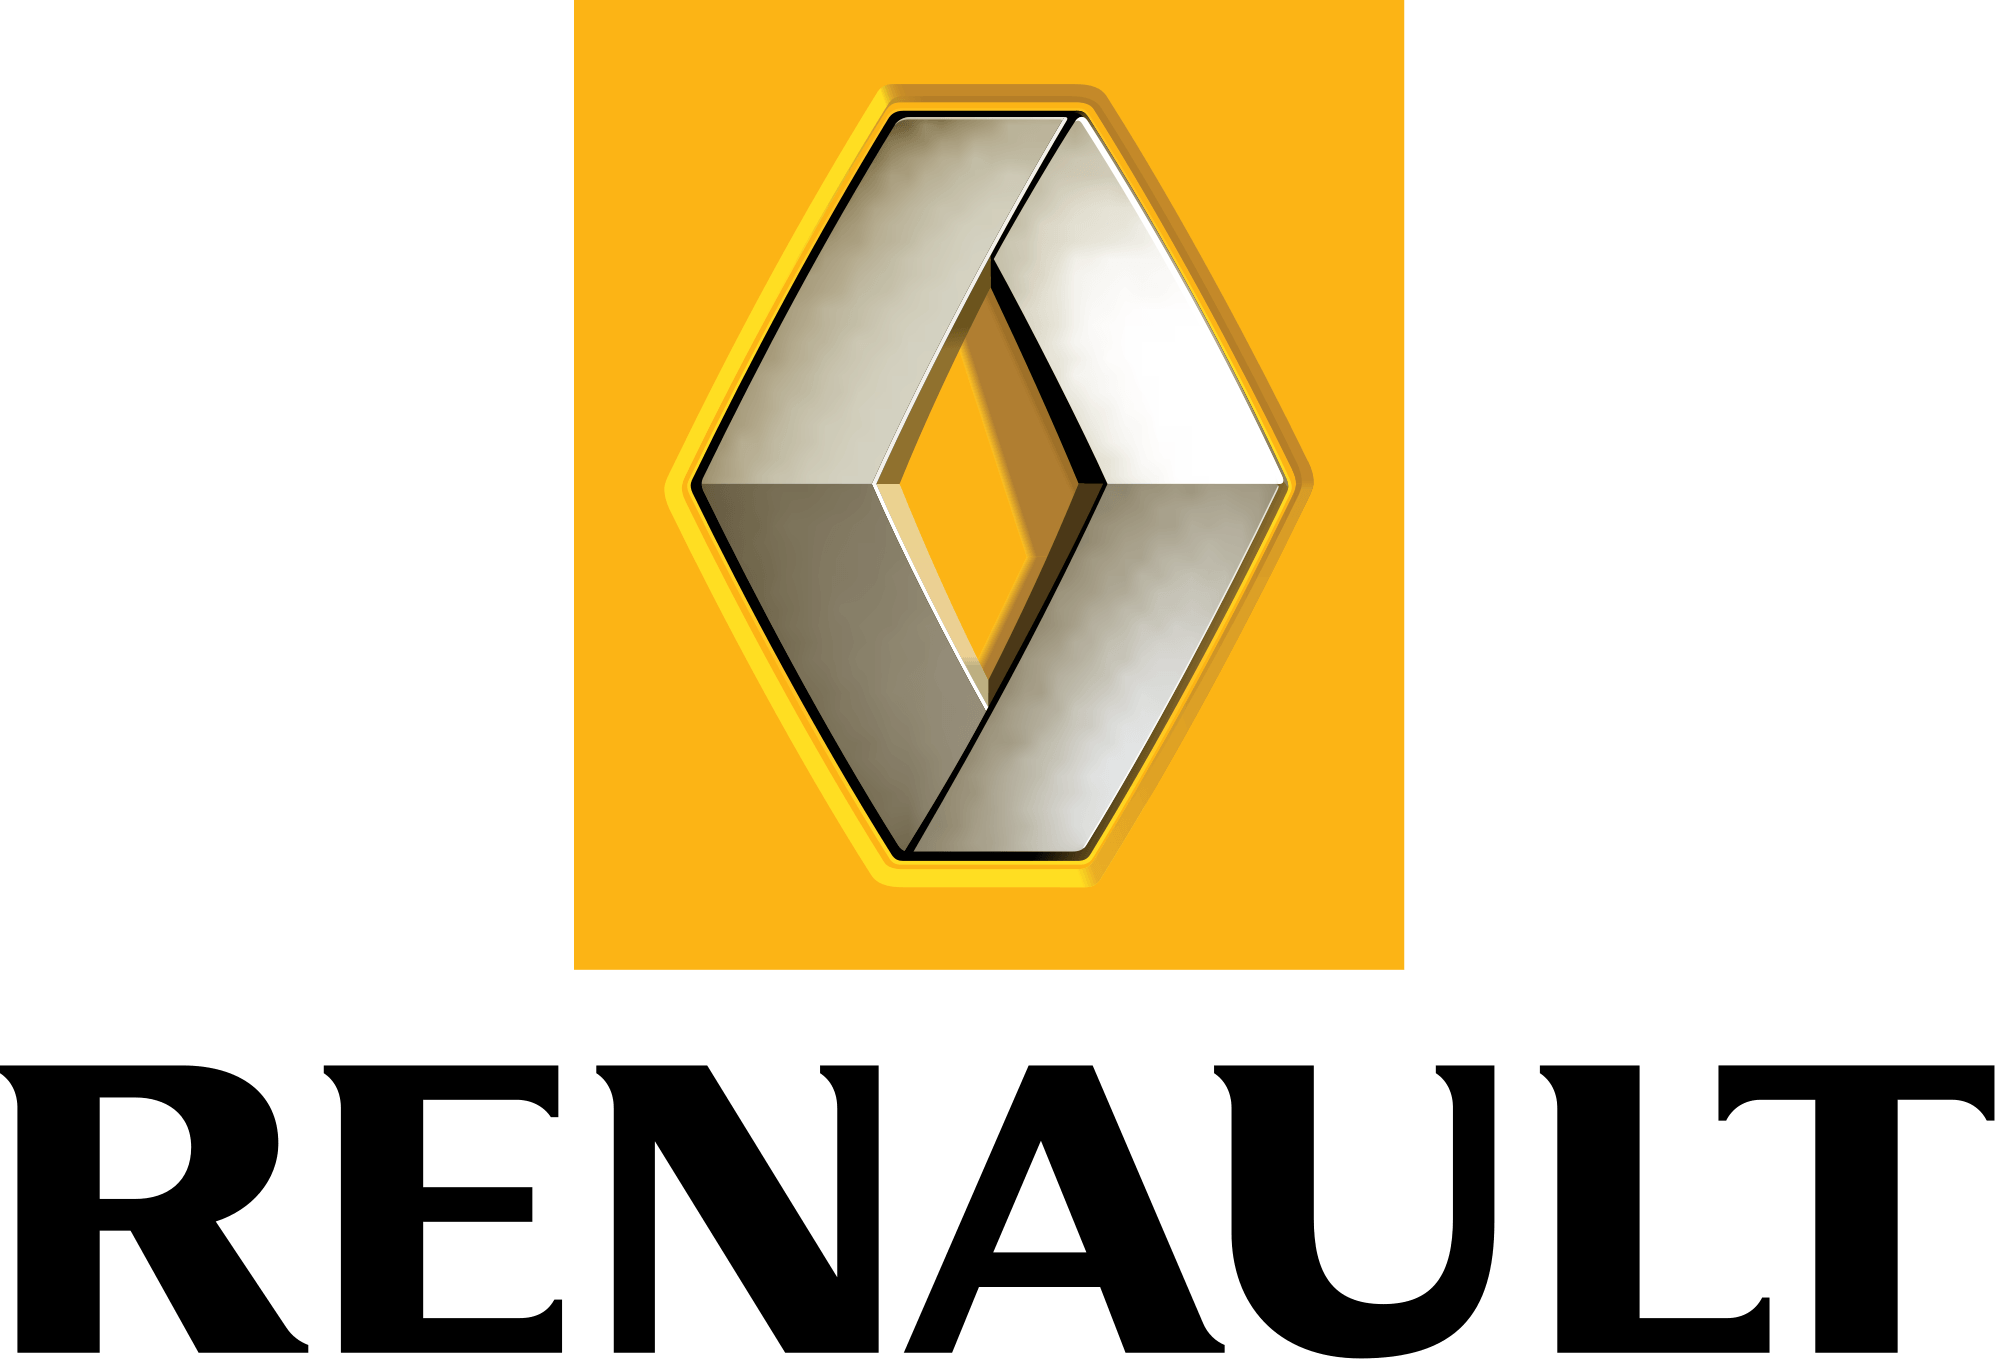 Rhombus Car Logo - Renault Logo, Renault Car Symbol Meaning and History | Car Brand ...